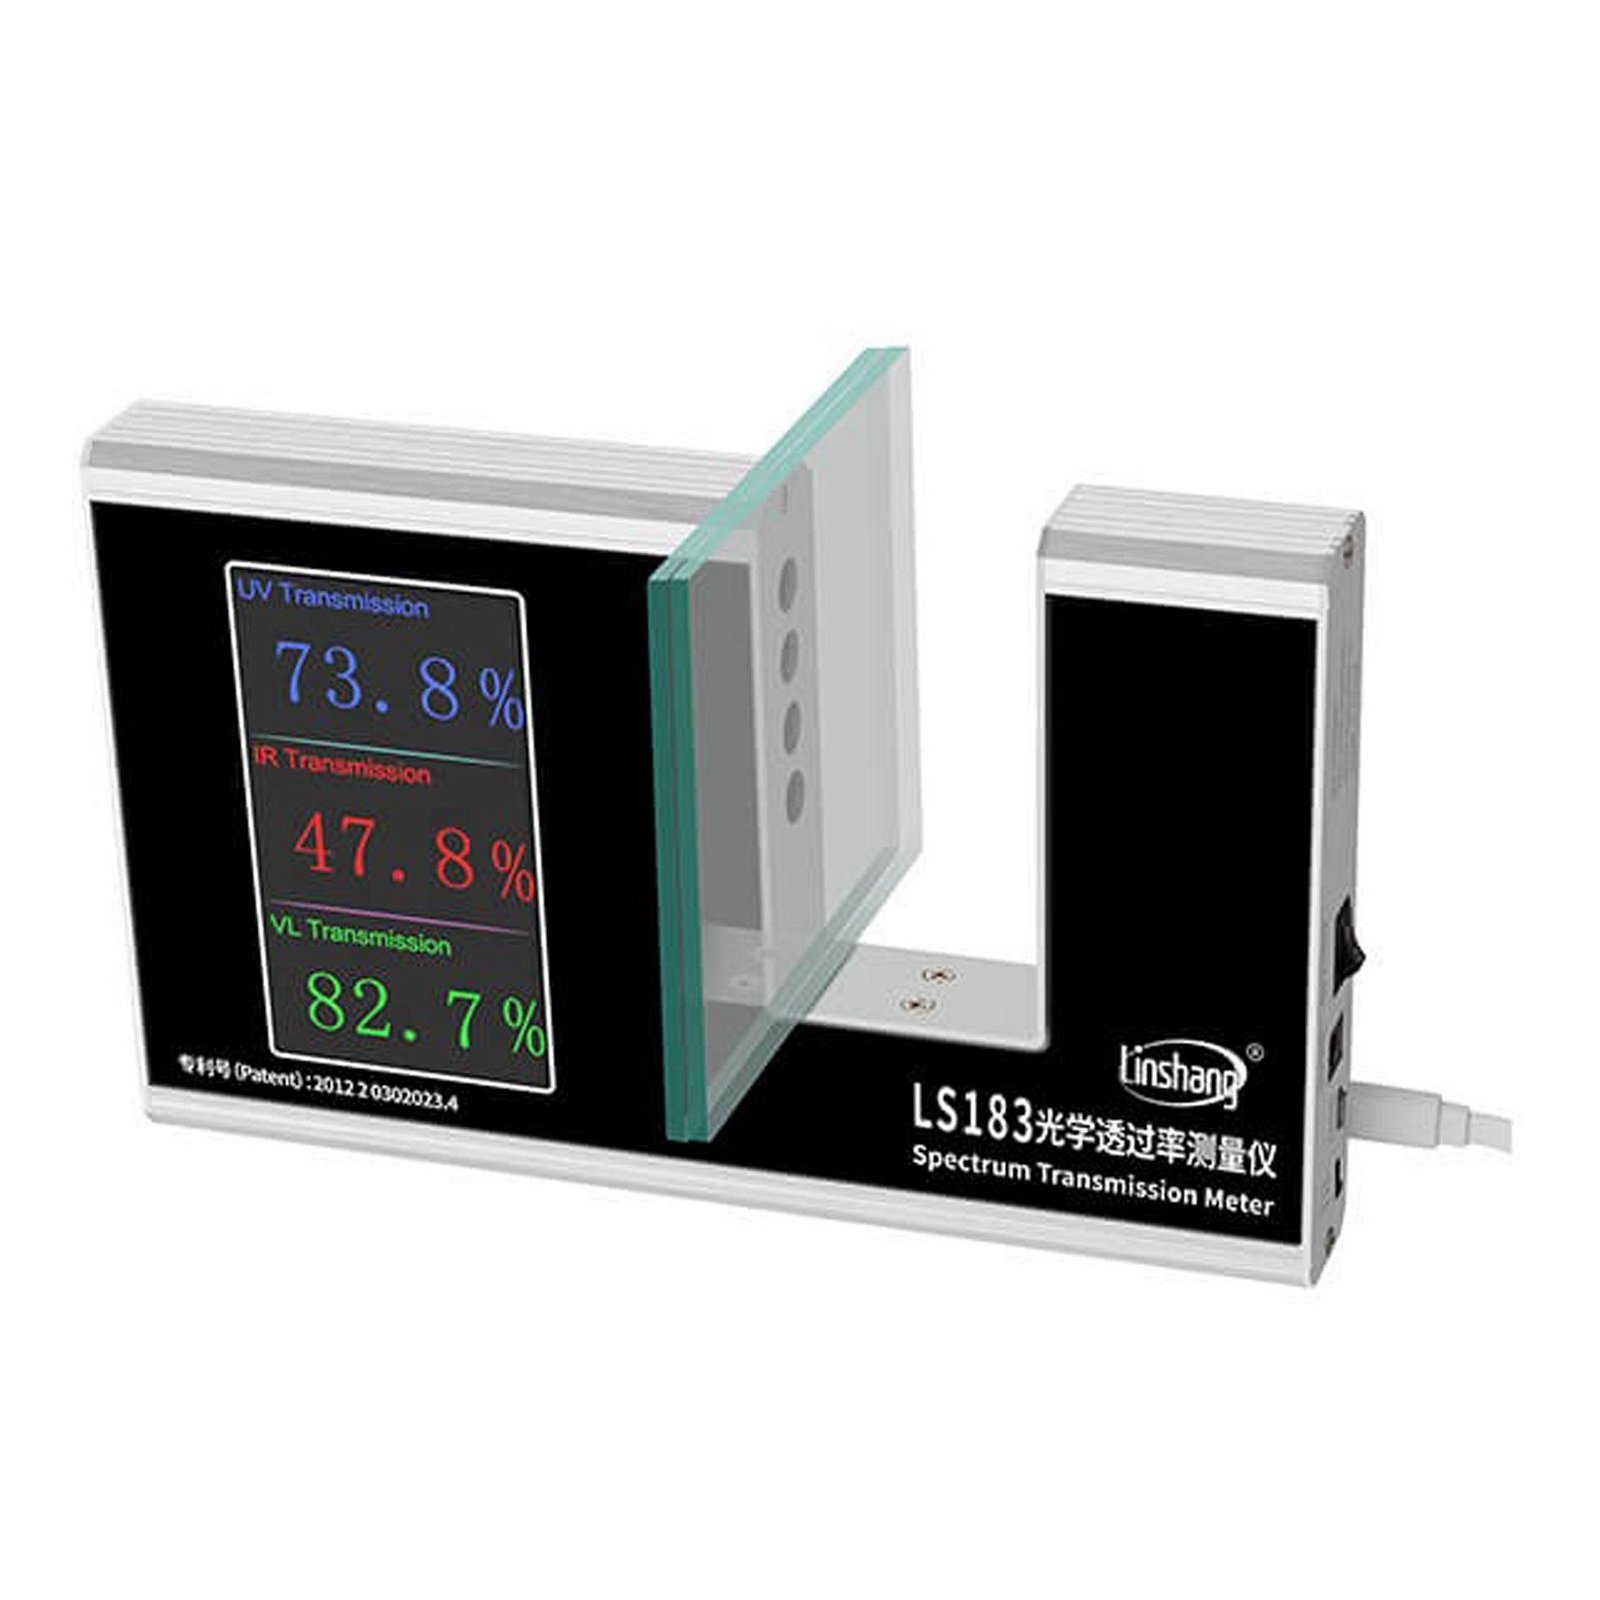 LS183 Spectrum Transmission Meter film glass PMMA PC UV IR VL transmittance 3